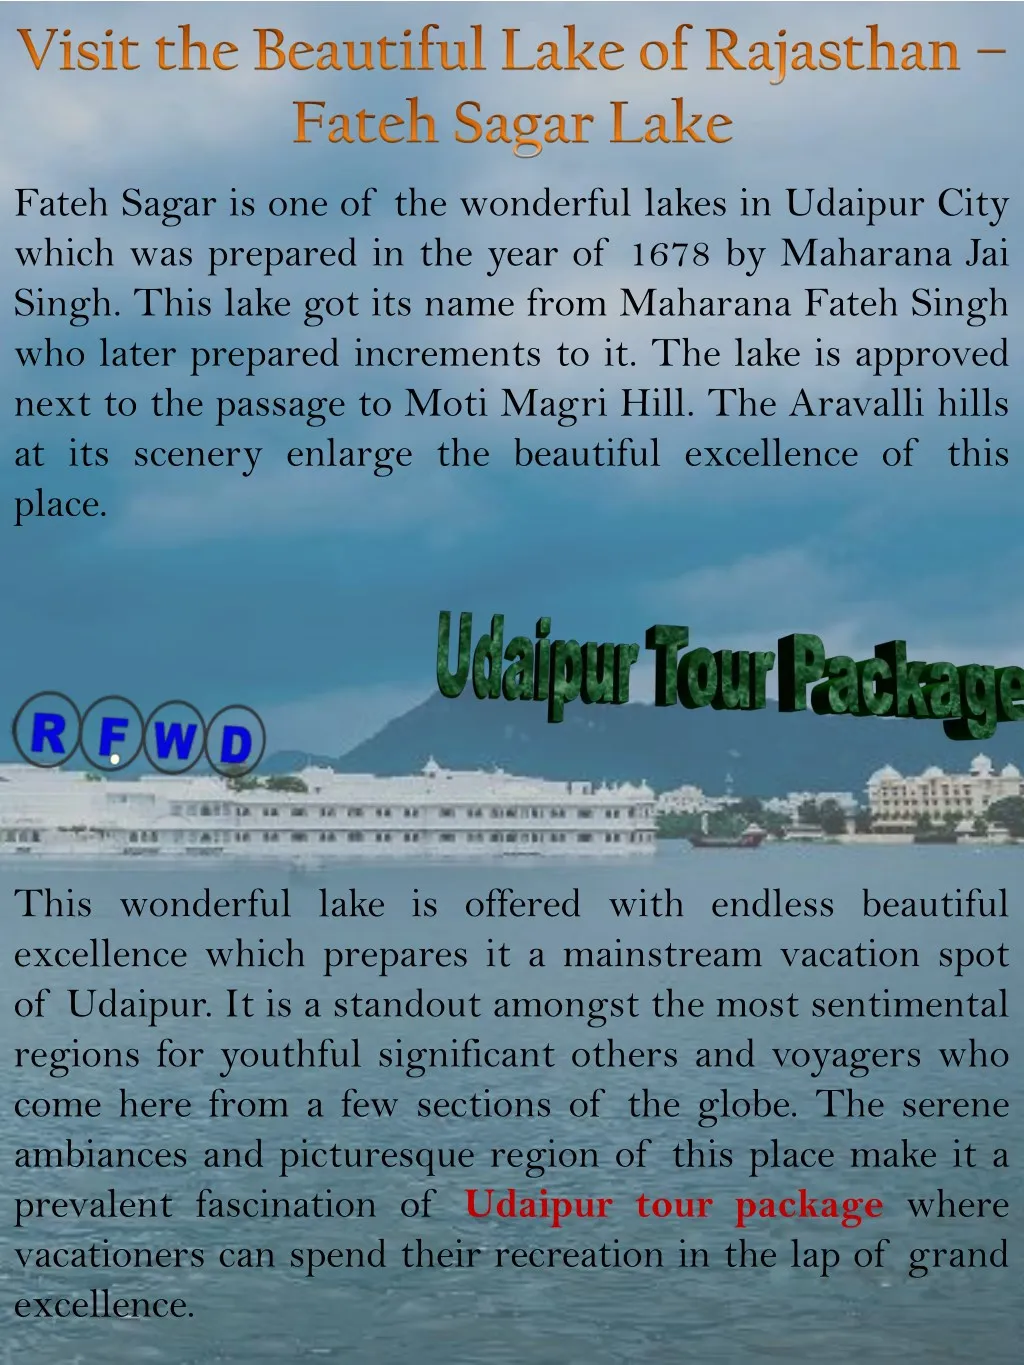 fateh sagar is one of the wonderful lakes